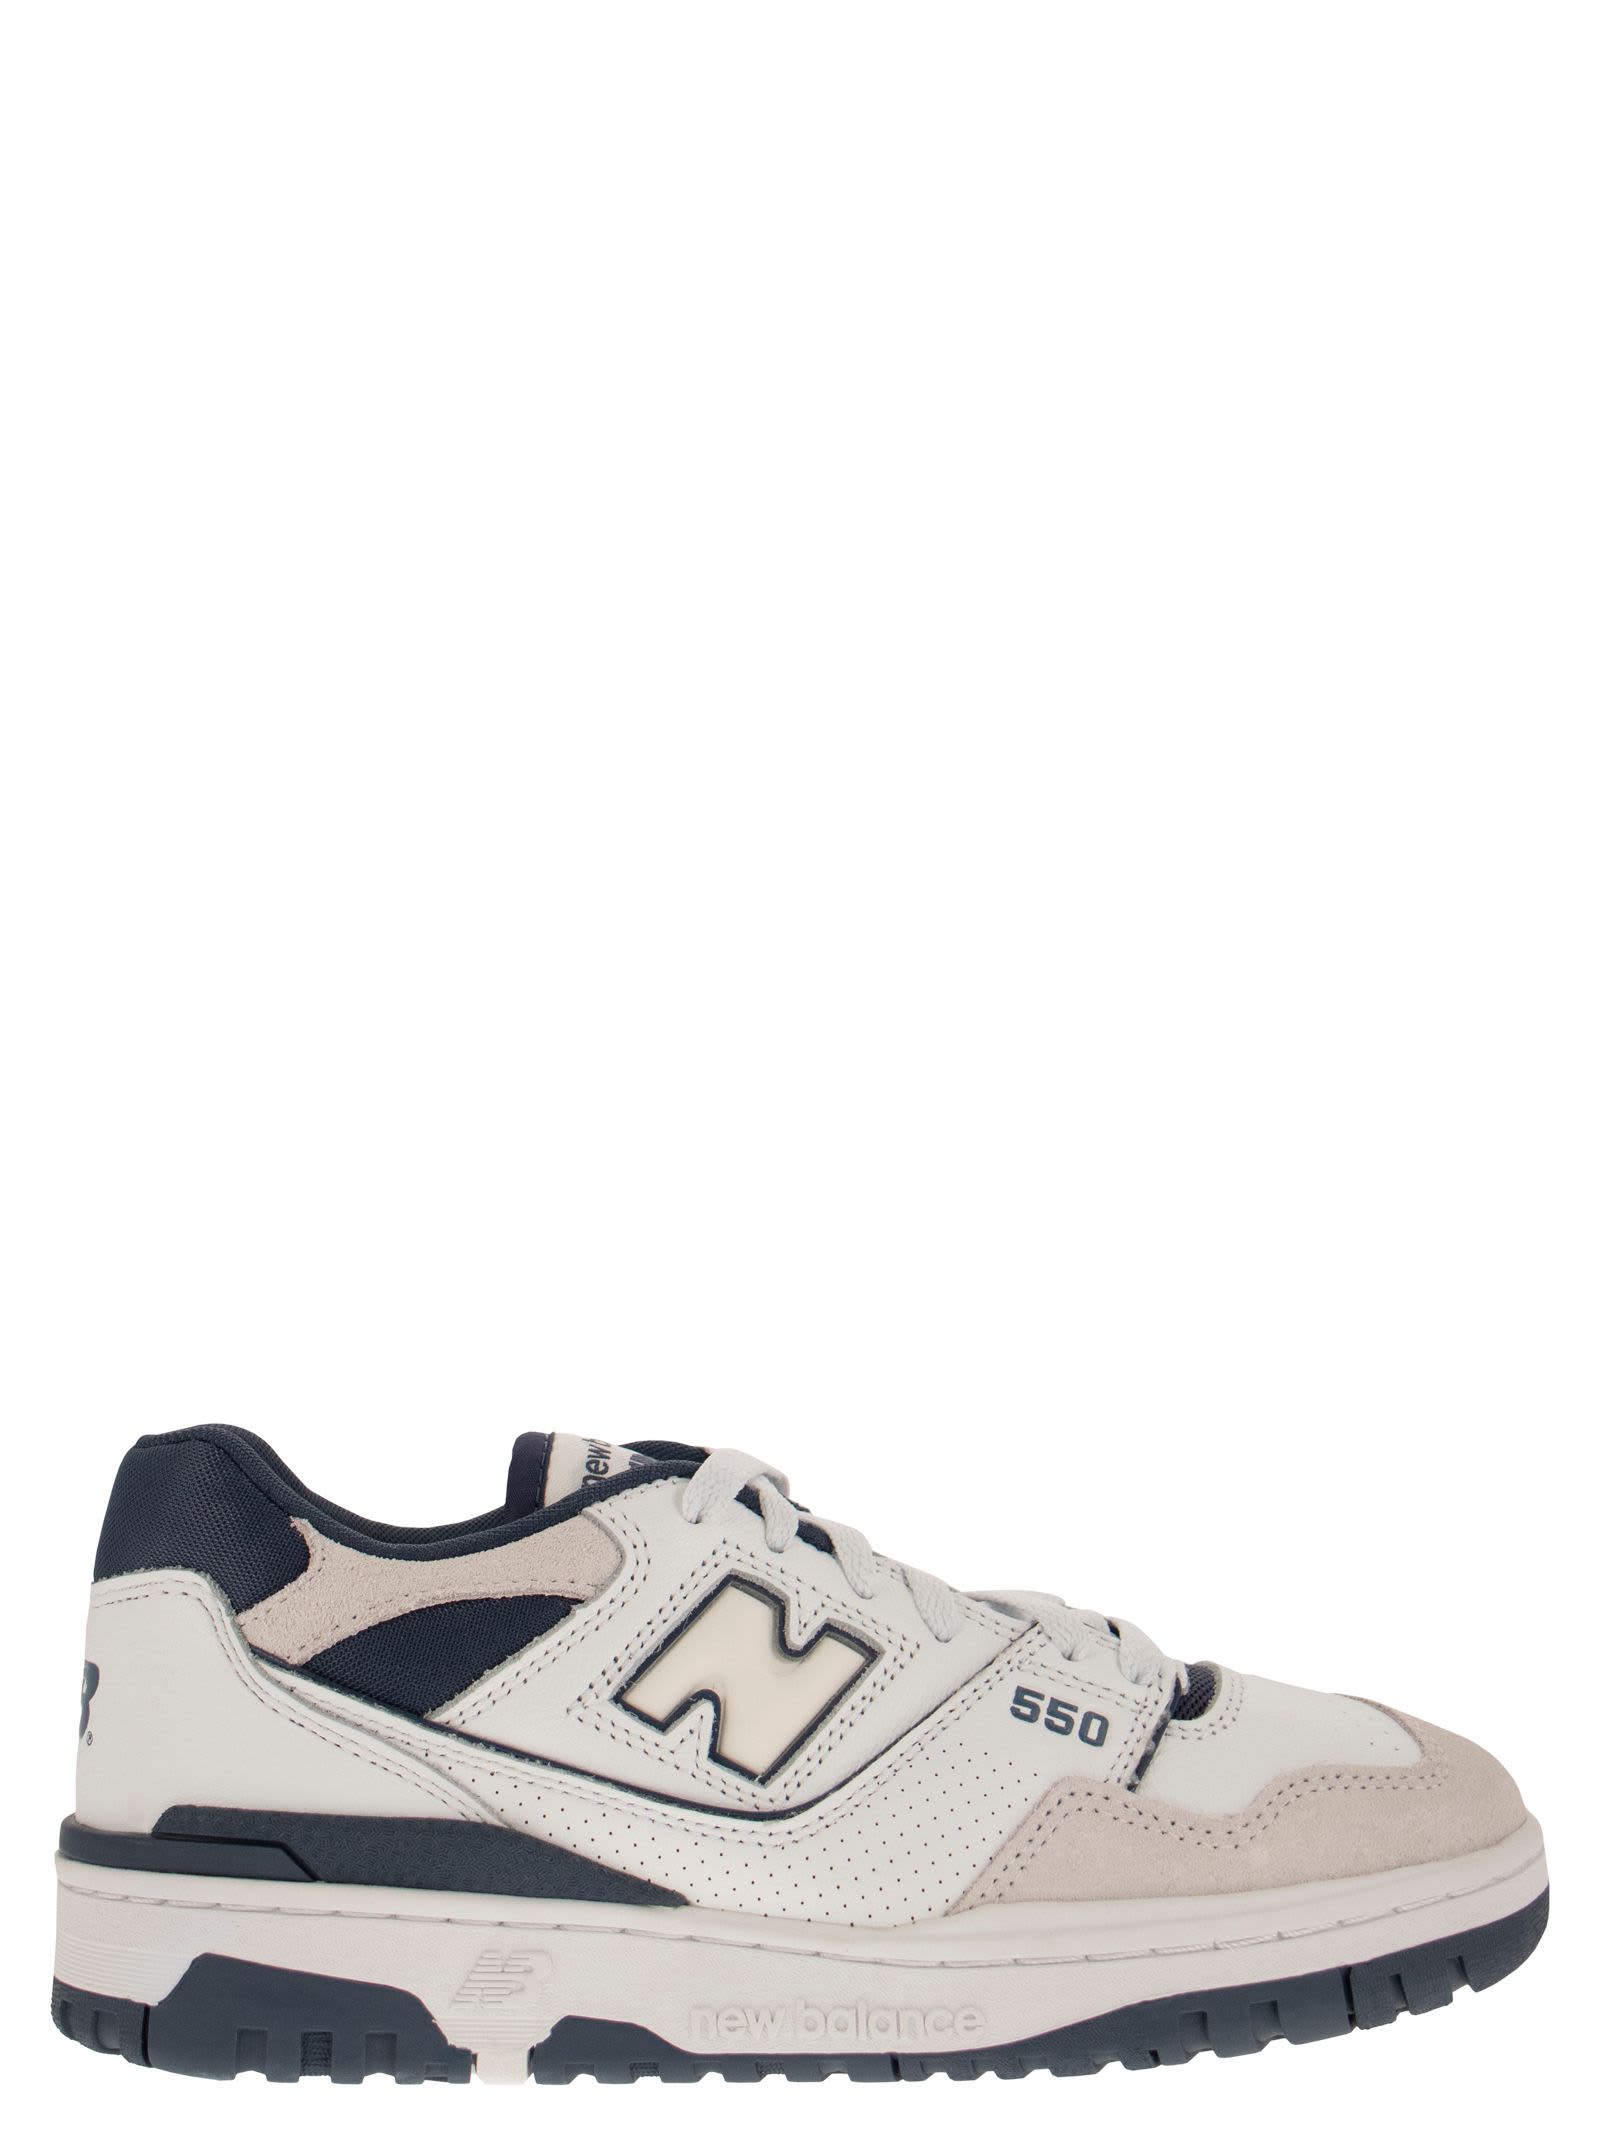 Bb550 - Sneakers